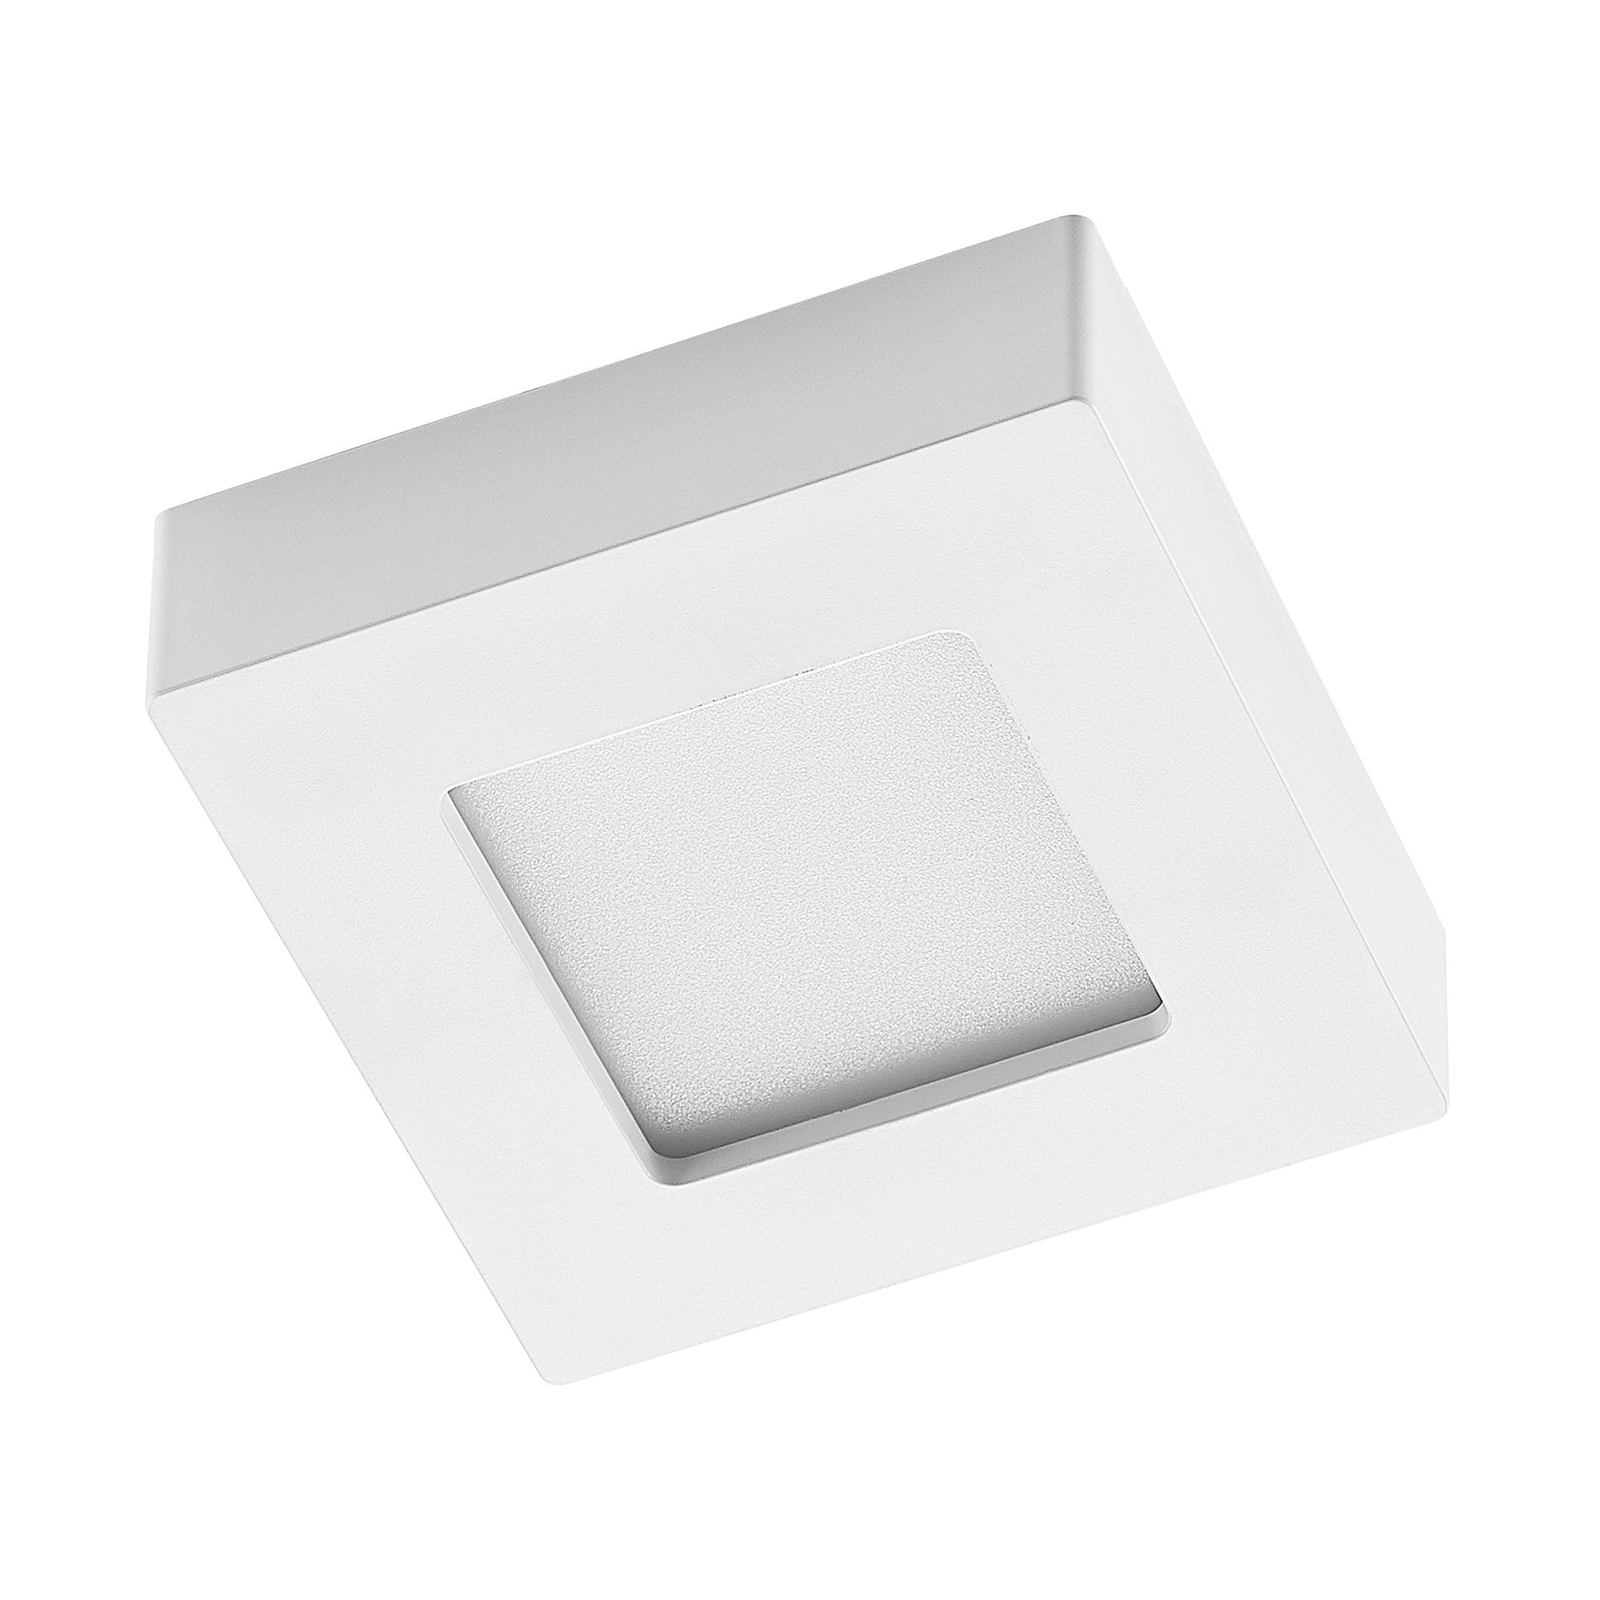 Prios LED plafondlamp Alette, wit, 12,2 cm, dimbaar